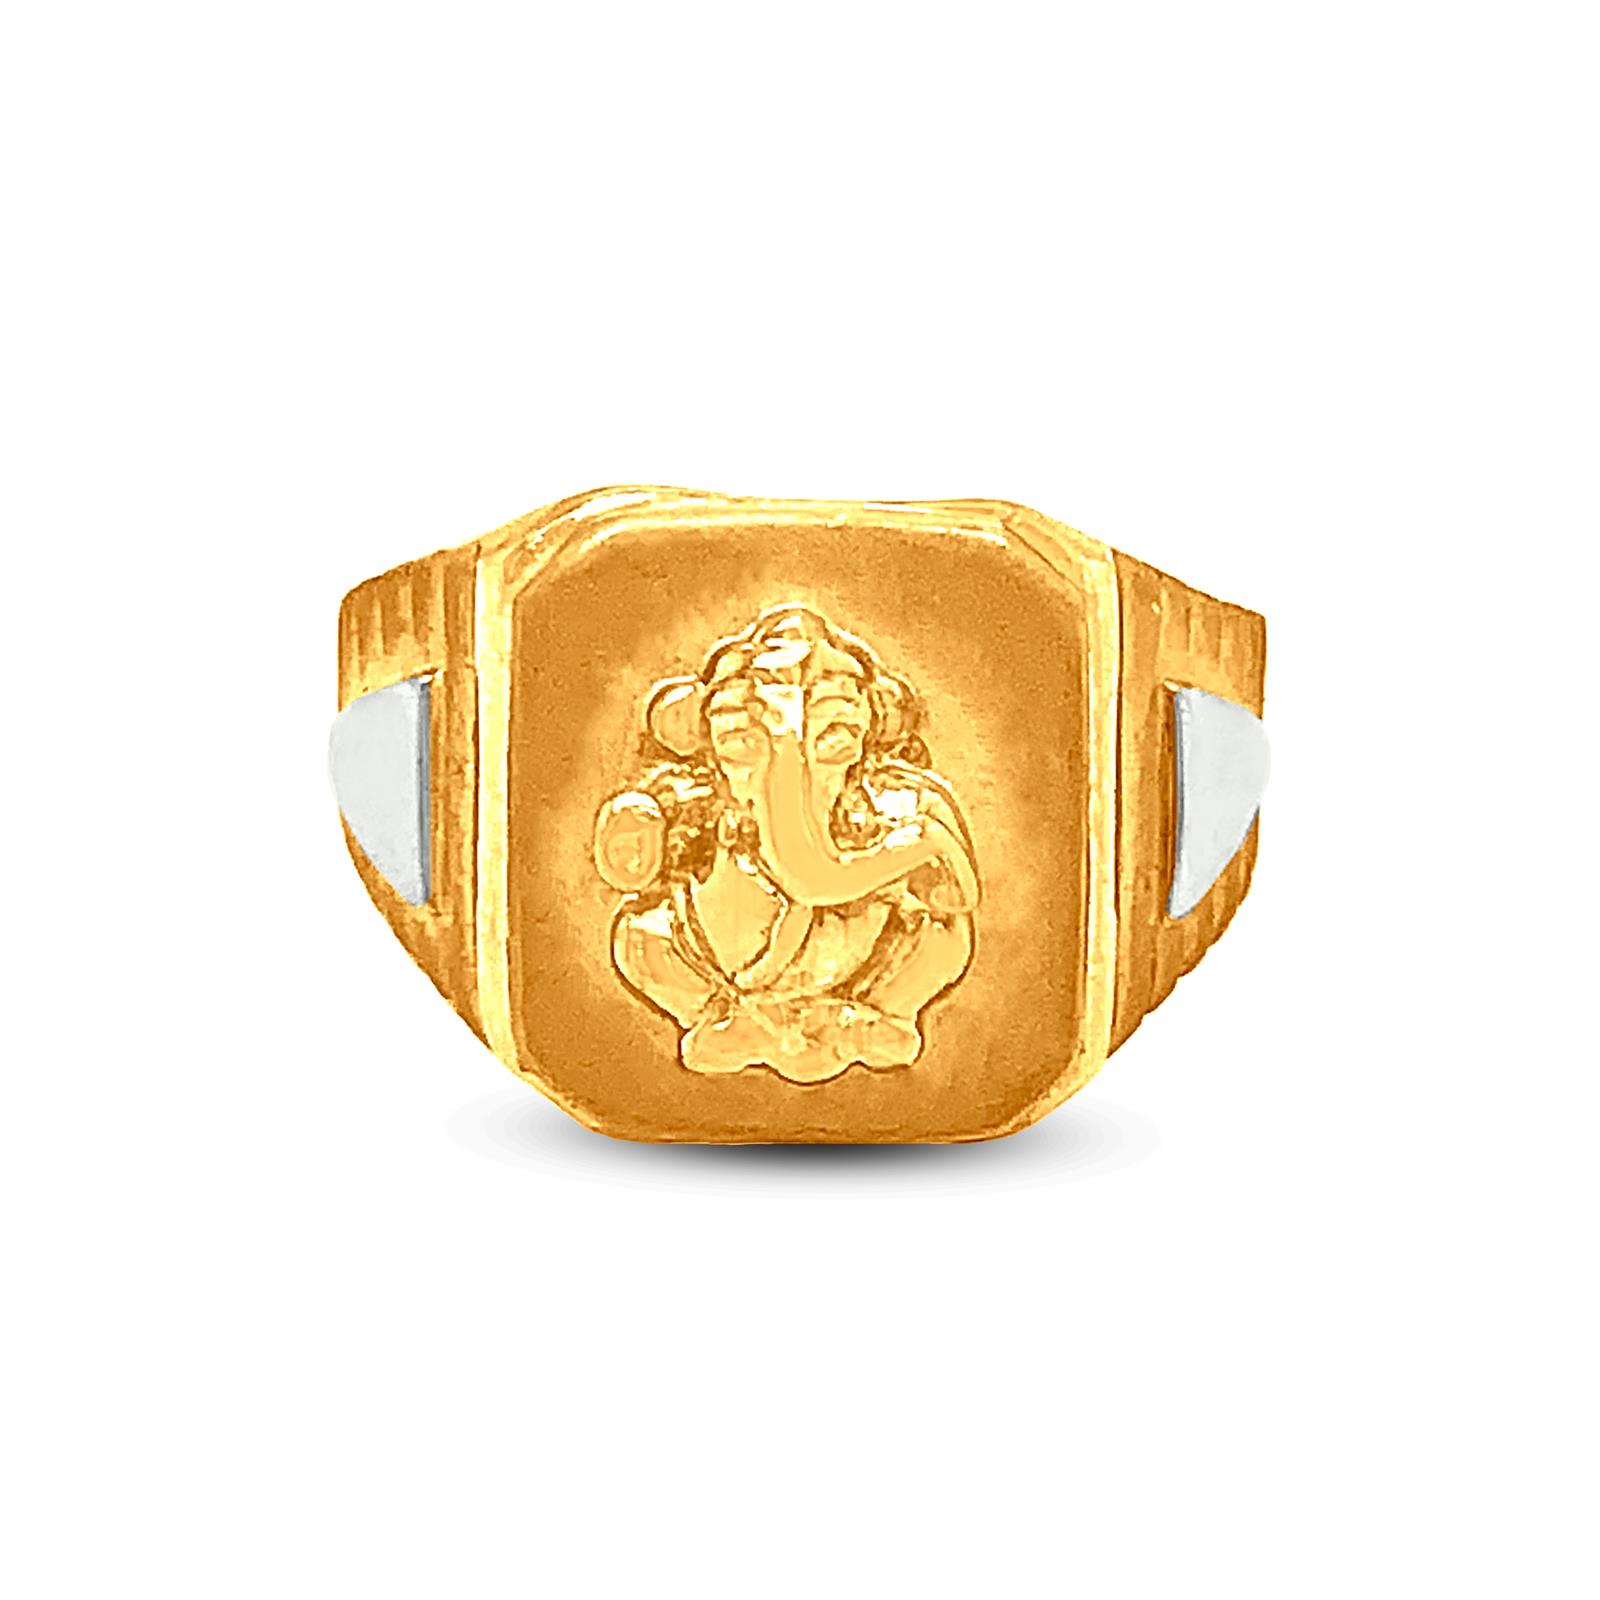 22K Gold 'Tortoise' Ring For Men with Cz & Color Stones - 235-GR6275 in  7.850 Grams